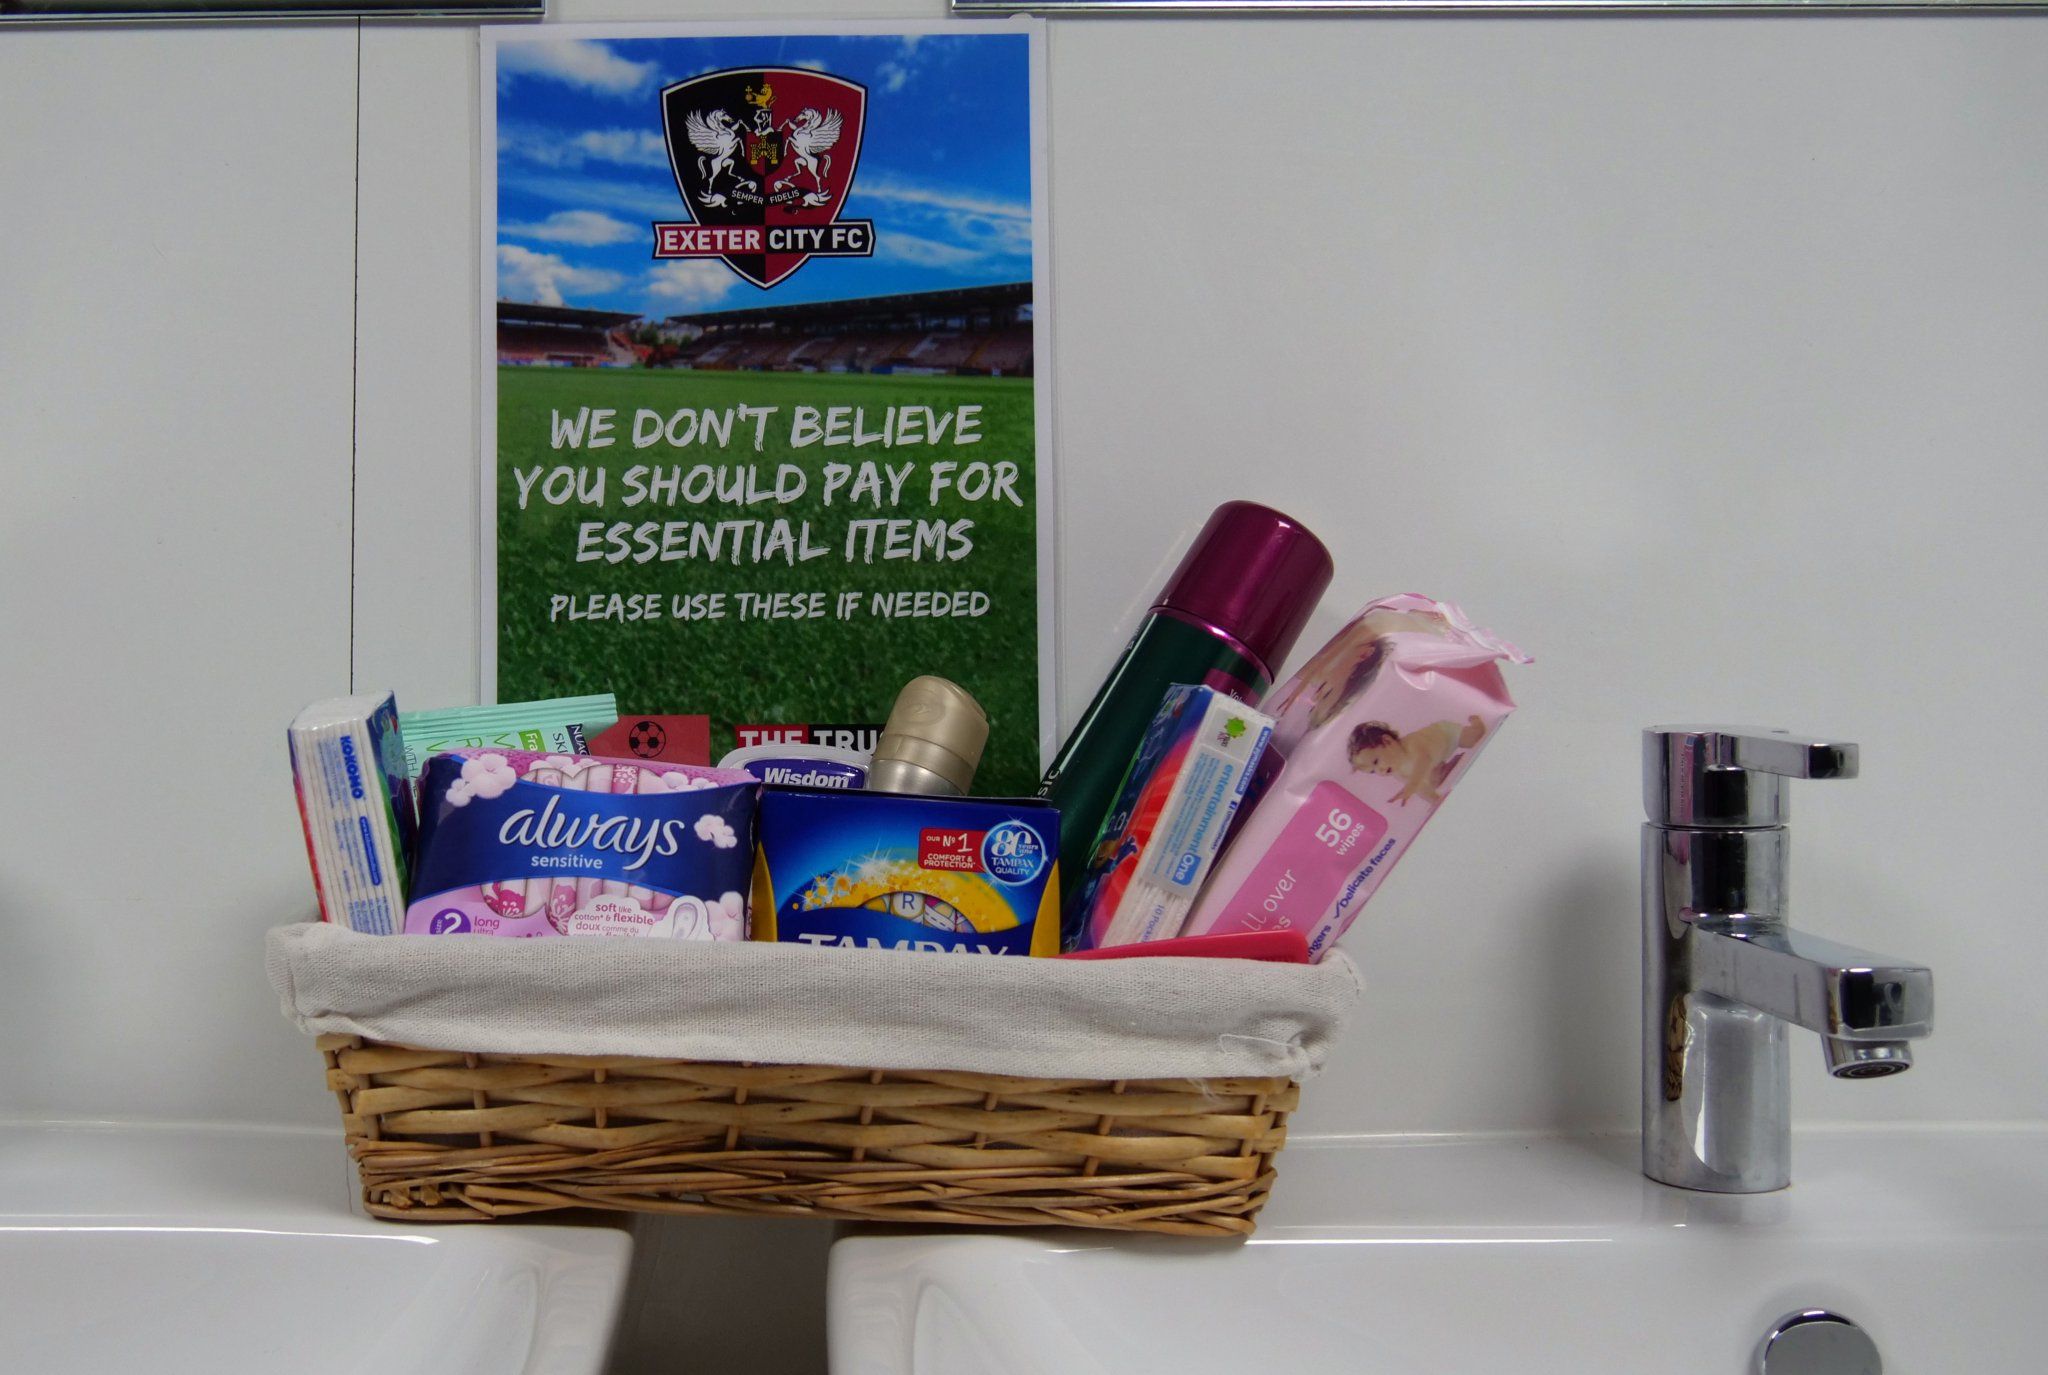 Productos de higiene femenina gratuitos. Foto: Exeter City FC